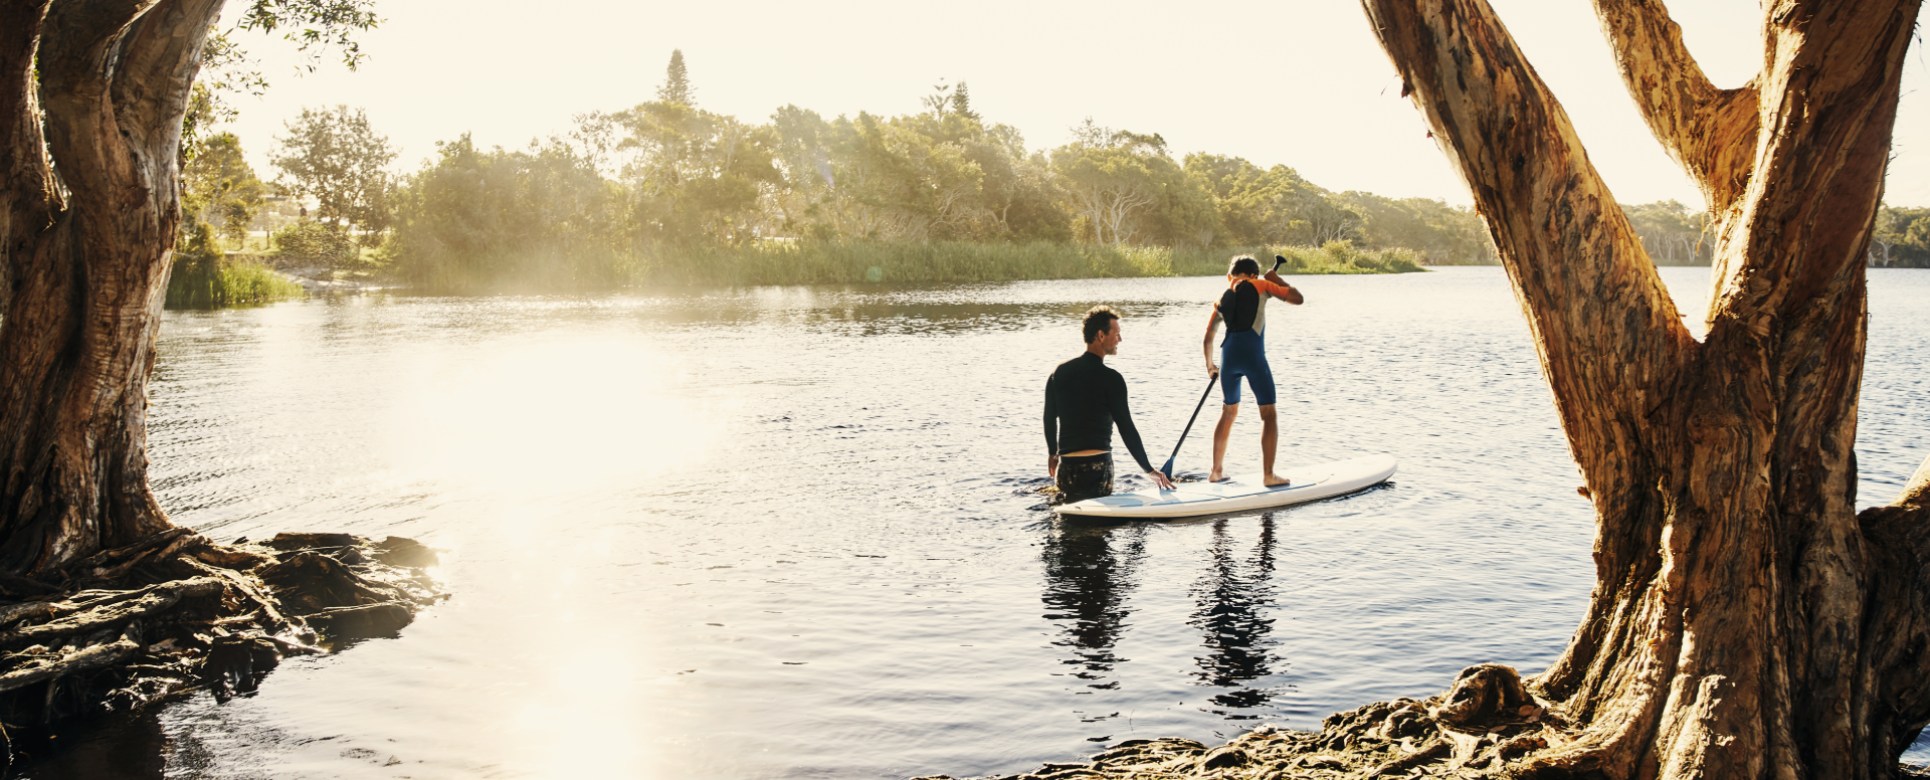 Muž vo vode pridržiava chlapca na paddleboarde.